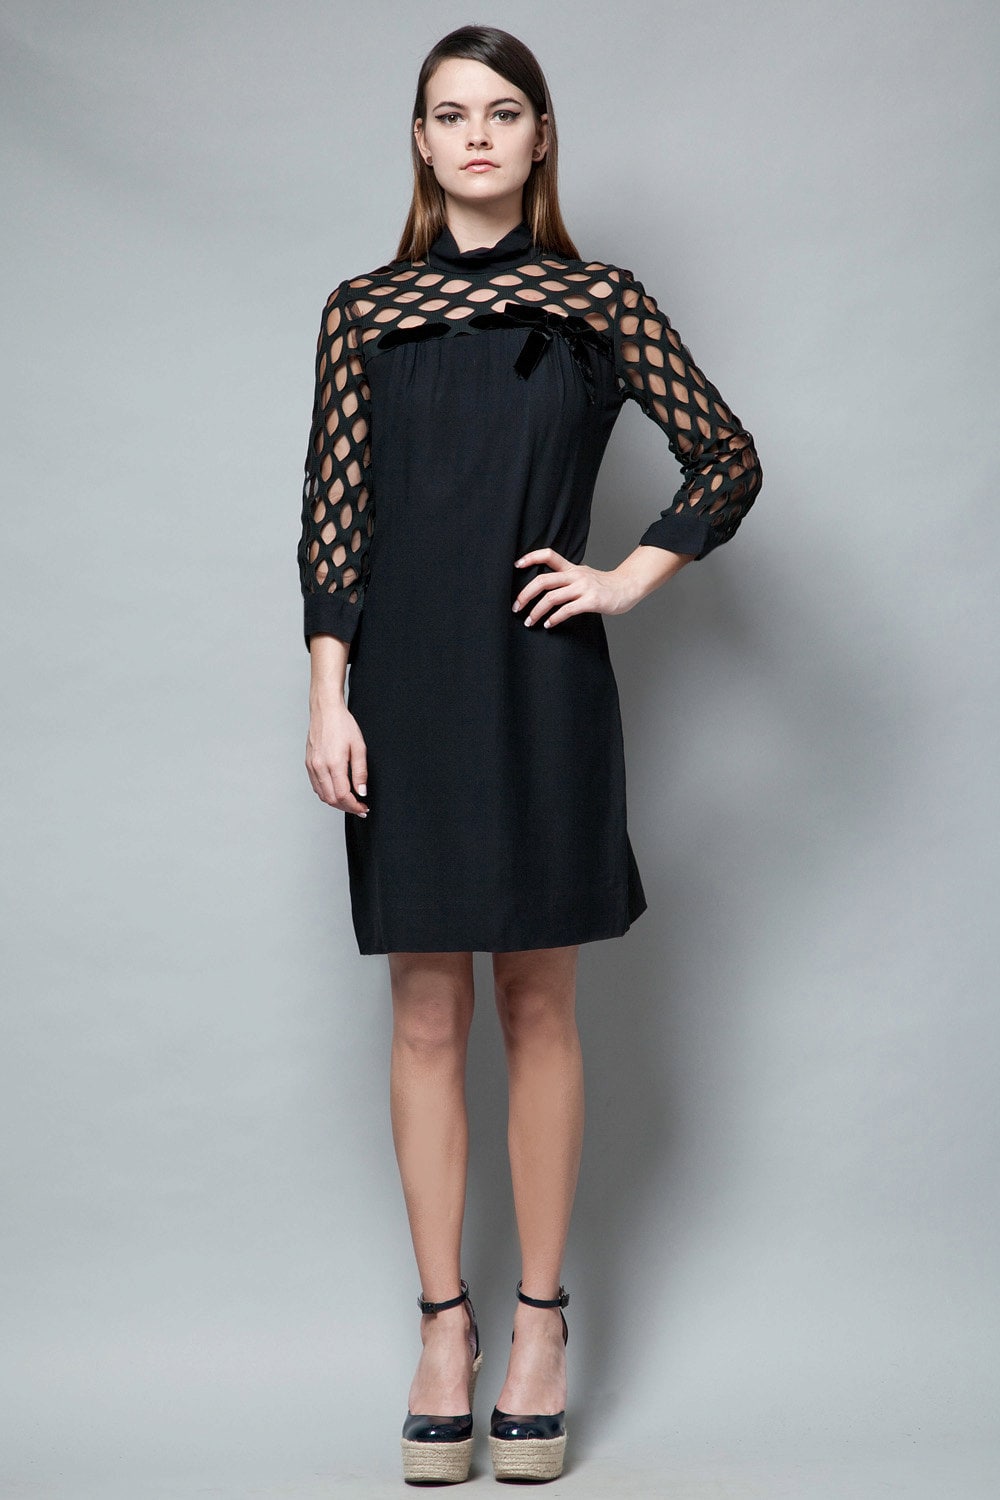 Little Black Dress LBD Vintage 50s Crepe Shift Eyelet Netting - Etsy